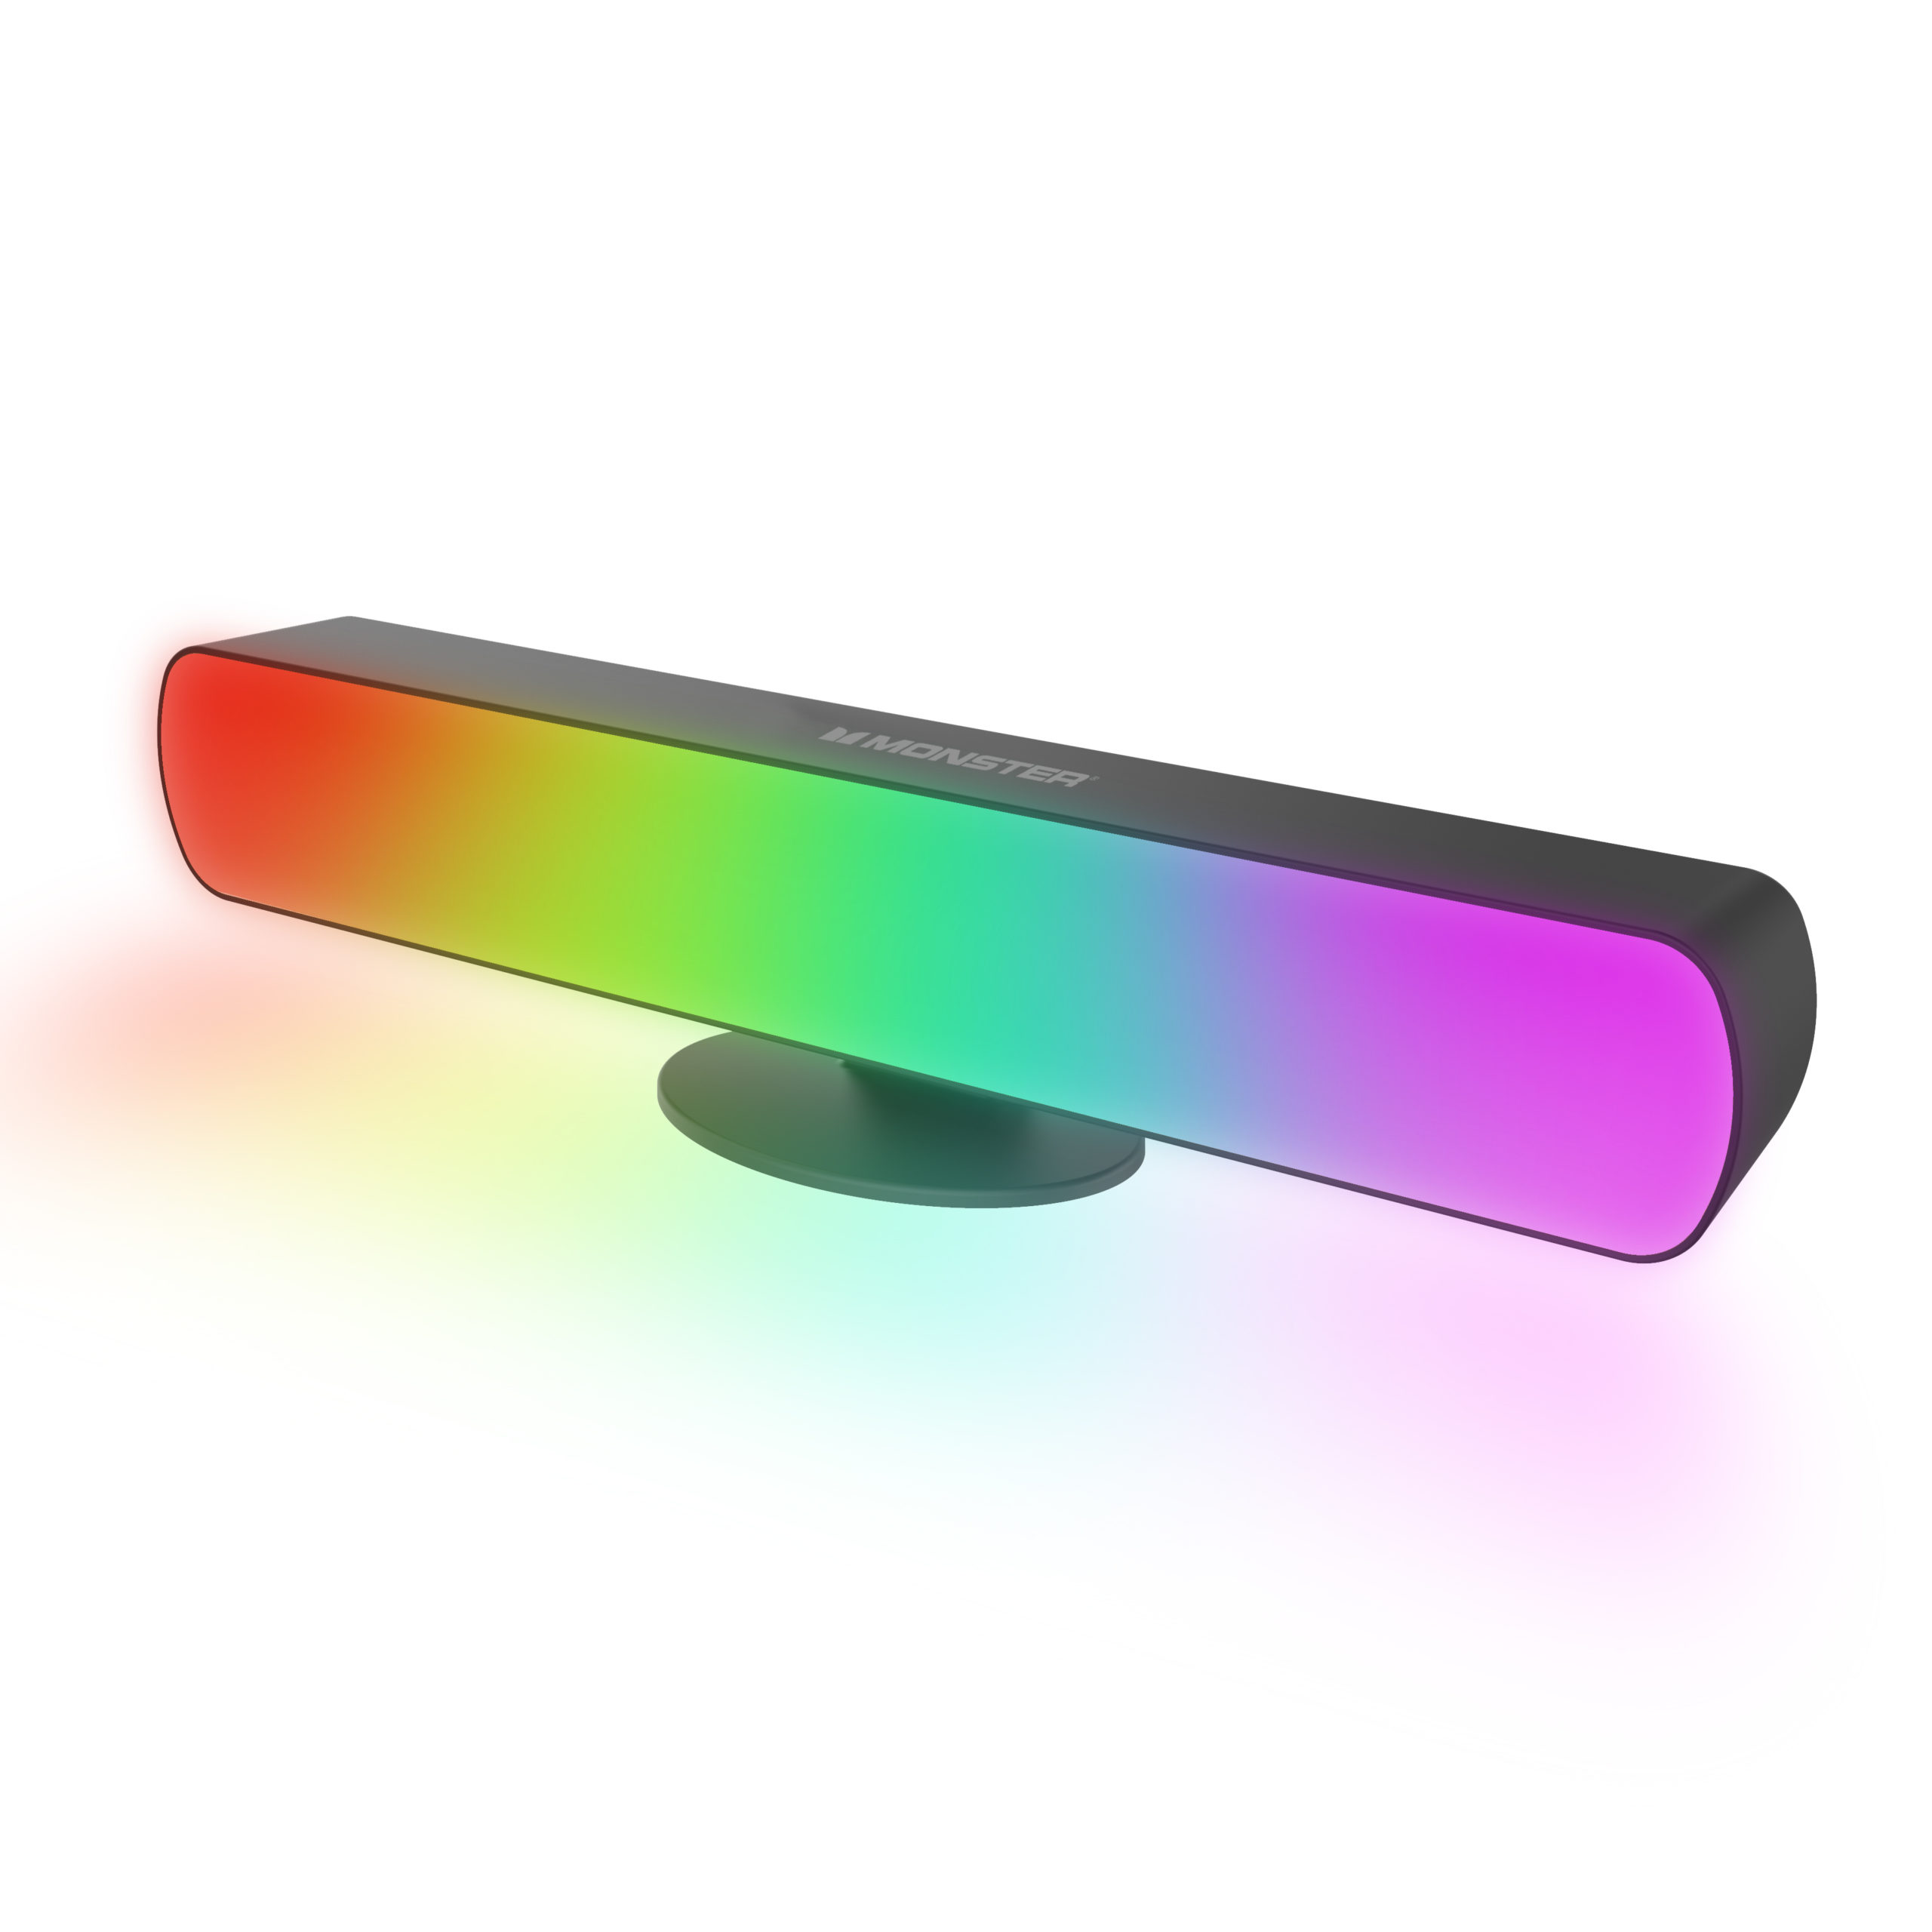 MLB7-2014-RGB Lightbar 02